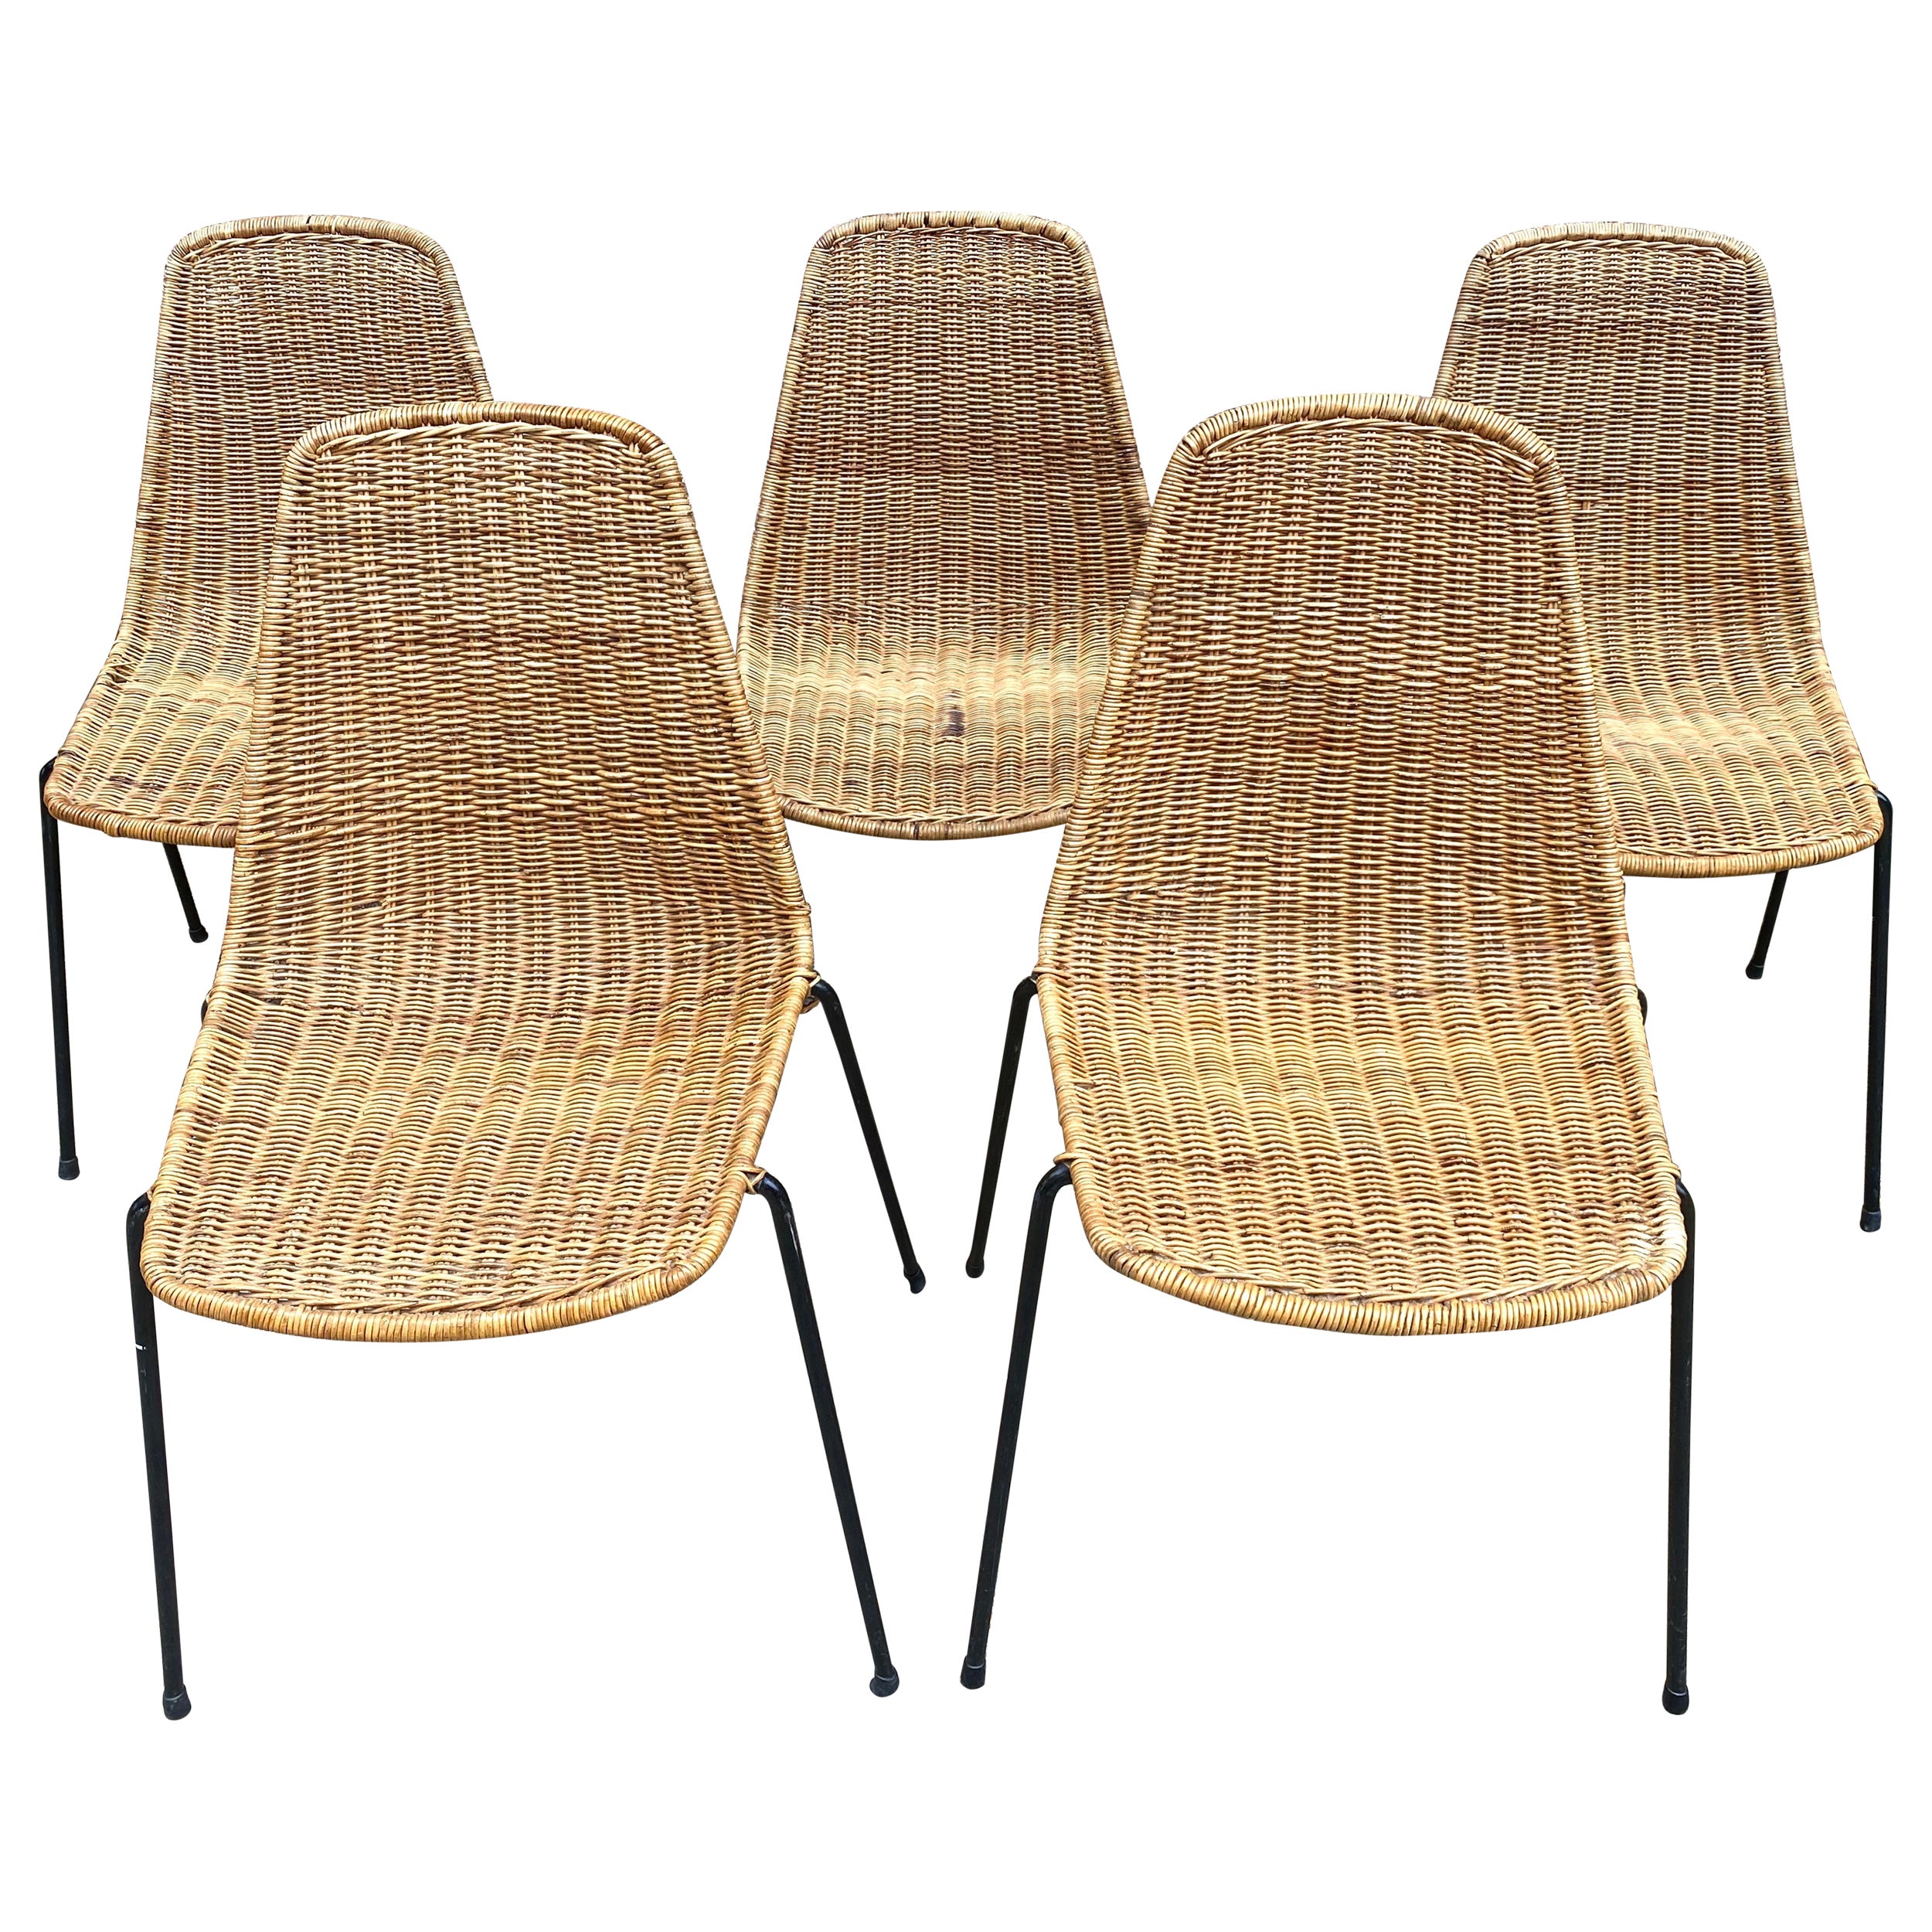 Set of 5 Gian Franco Legler Basket Chairs